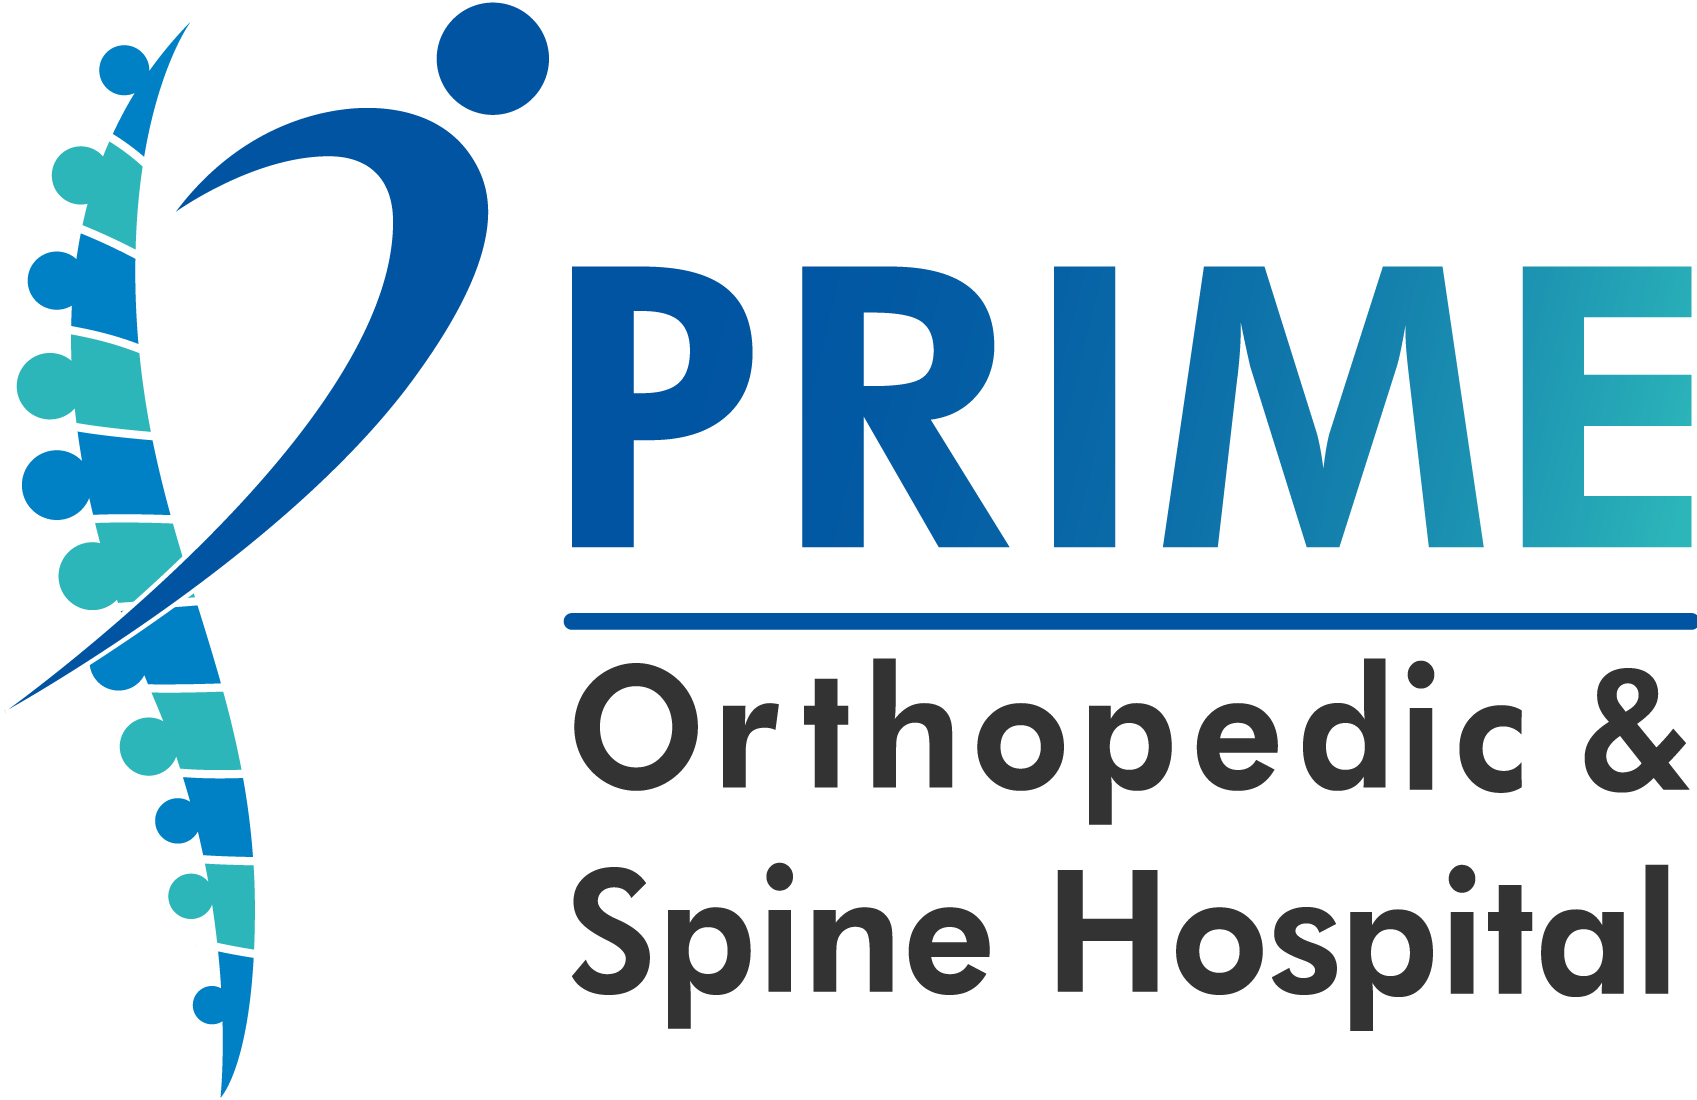 Prime Orthopedic & Spine Hospital